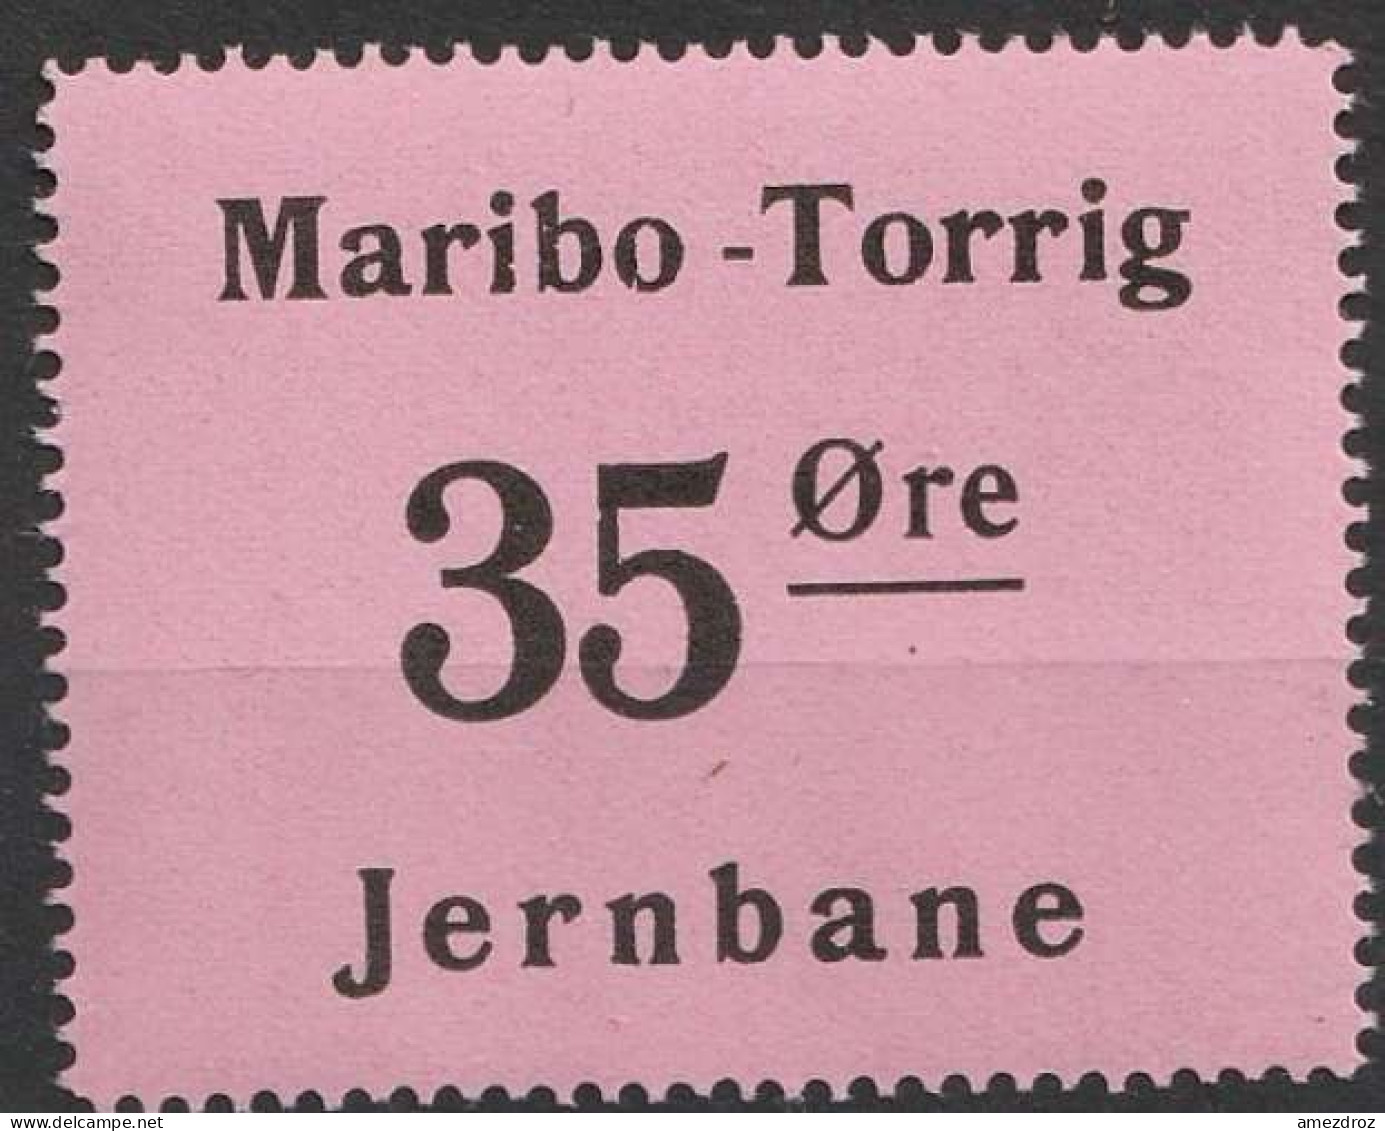 Chemin De Fer Danois ** - Dänemark Railway Eisenbahn Maribo - Torrig Jernbane   (A13) - Colis Postaux